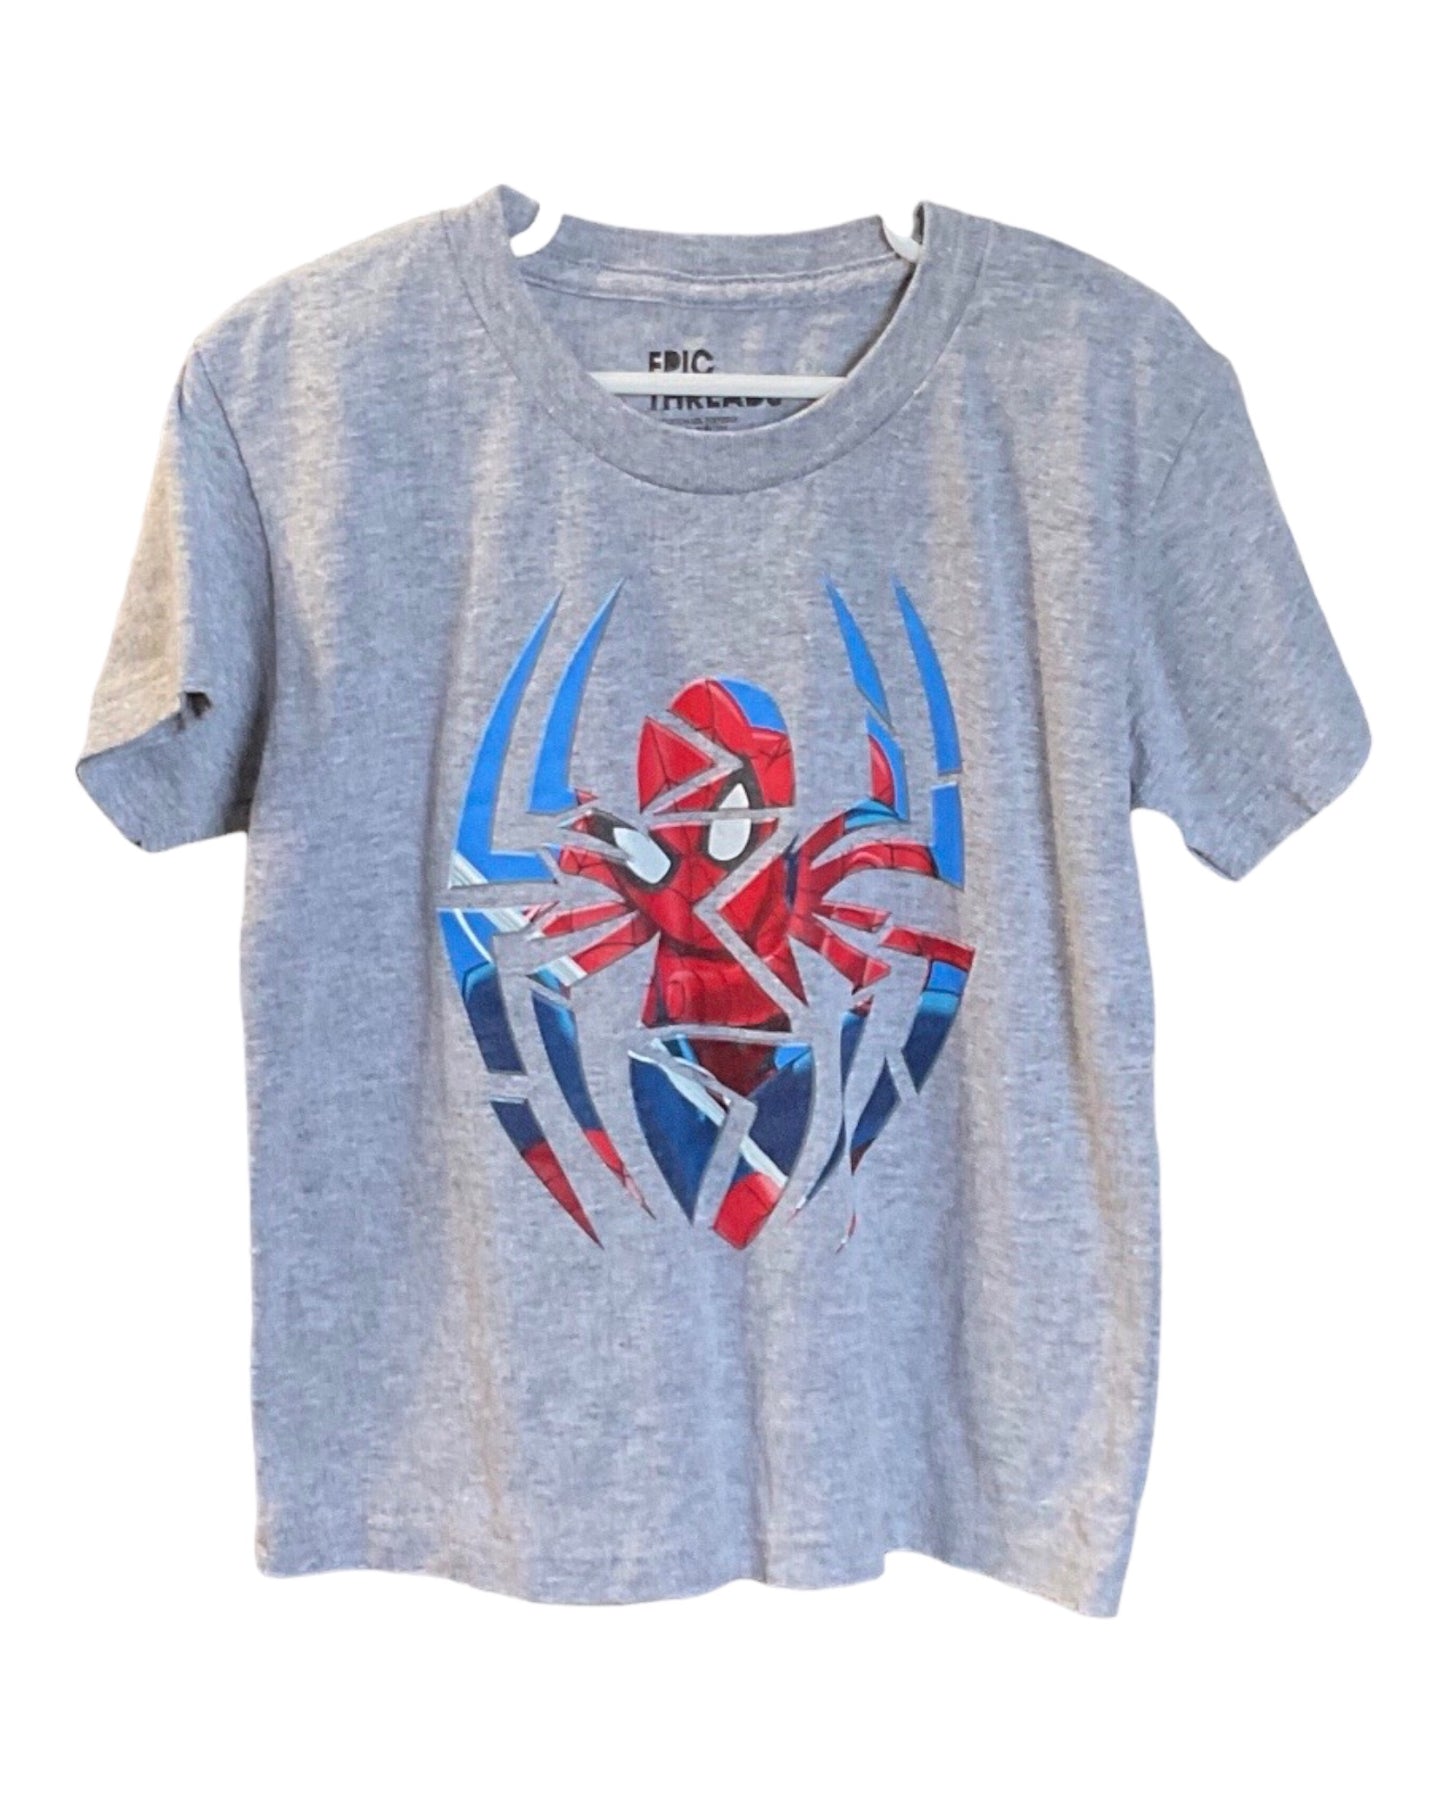 Epic Threads Marvel Spider-Man Graphic Boys T-shirt Size 5